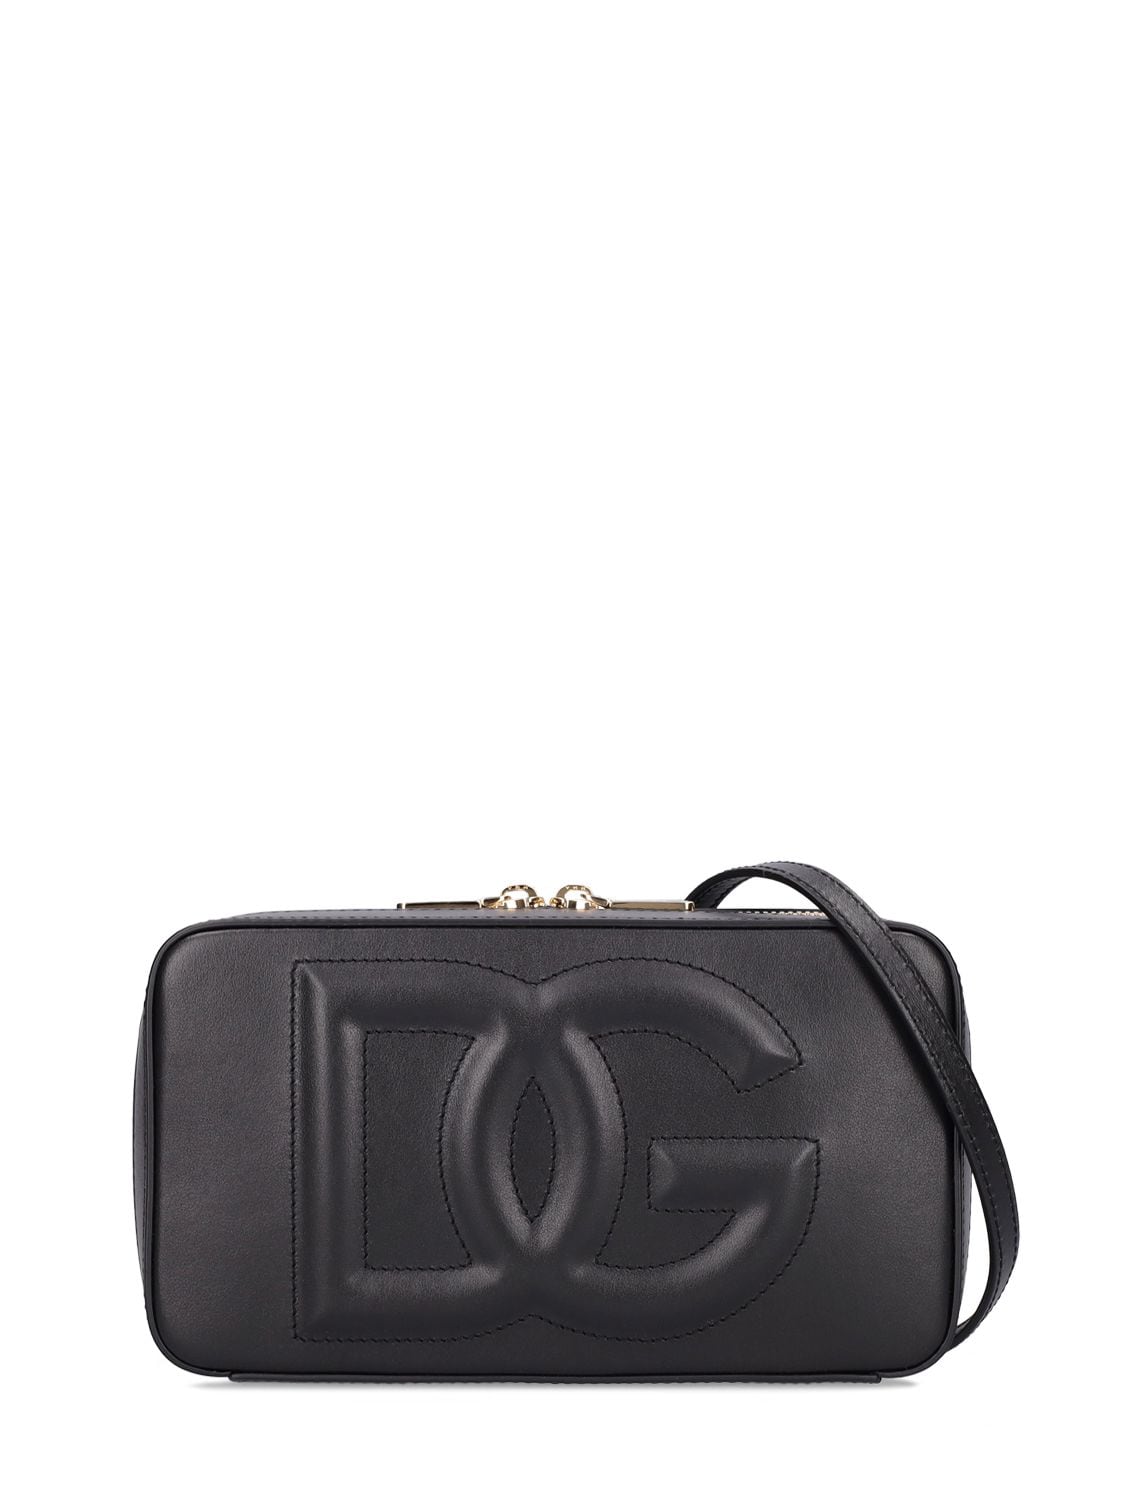 Dolce & Gabbana - Logo leather camera bag - Black | Luisaviaroma